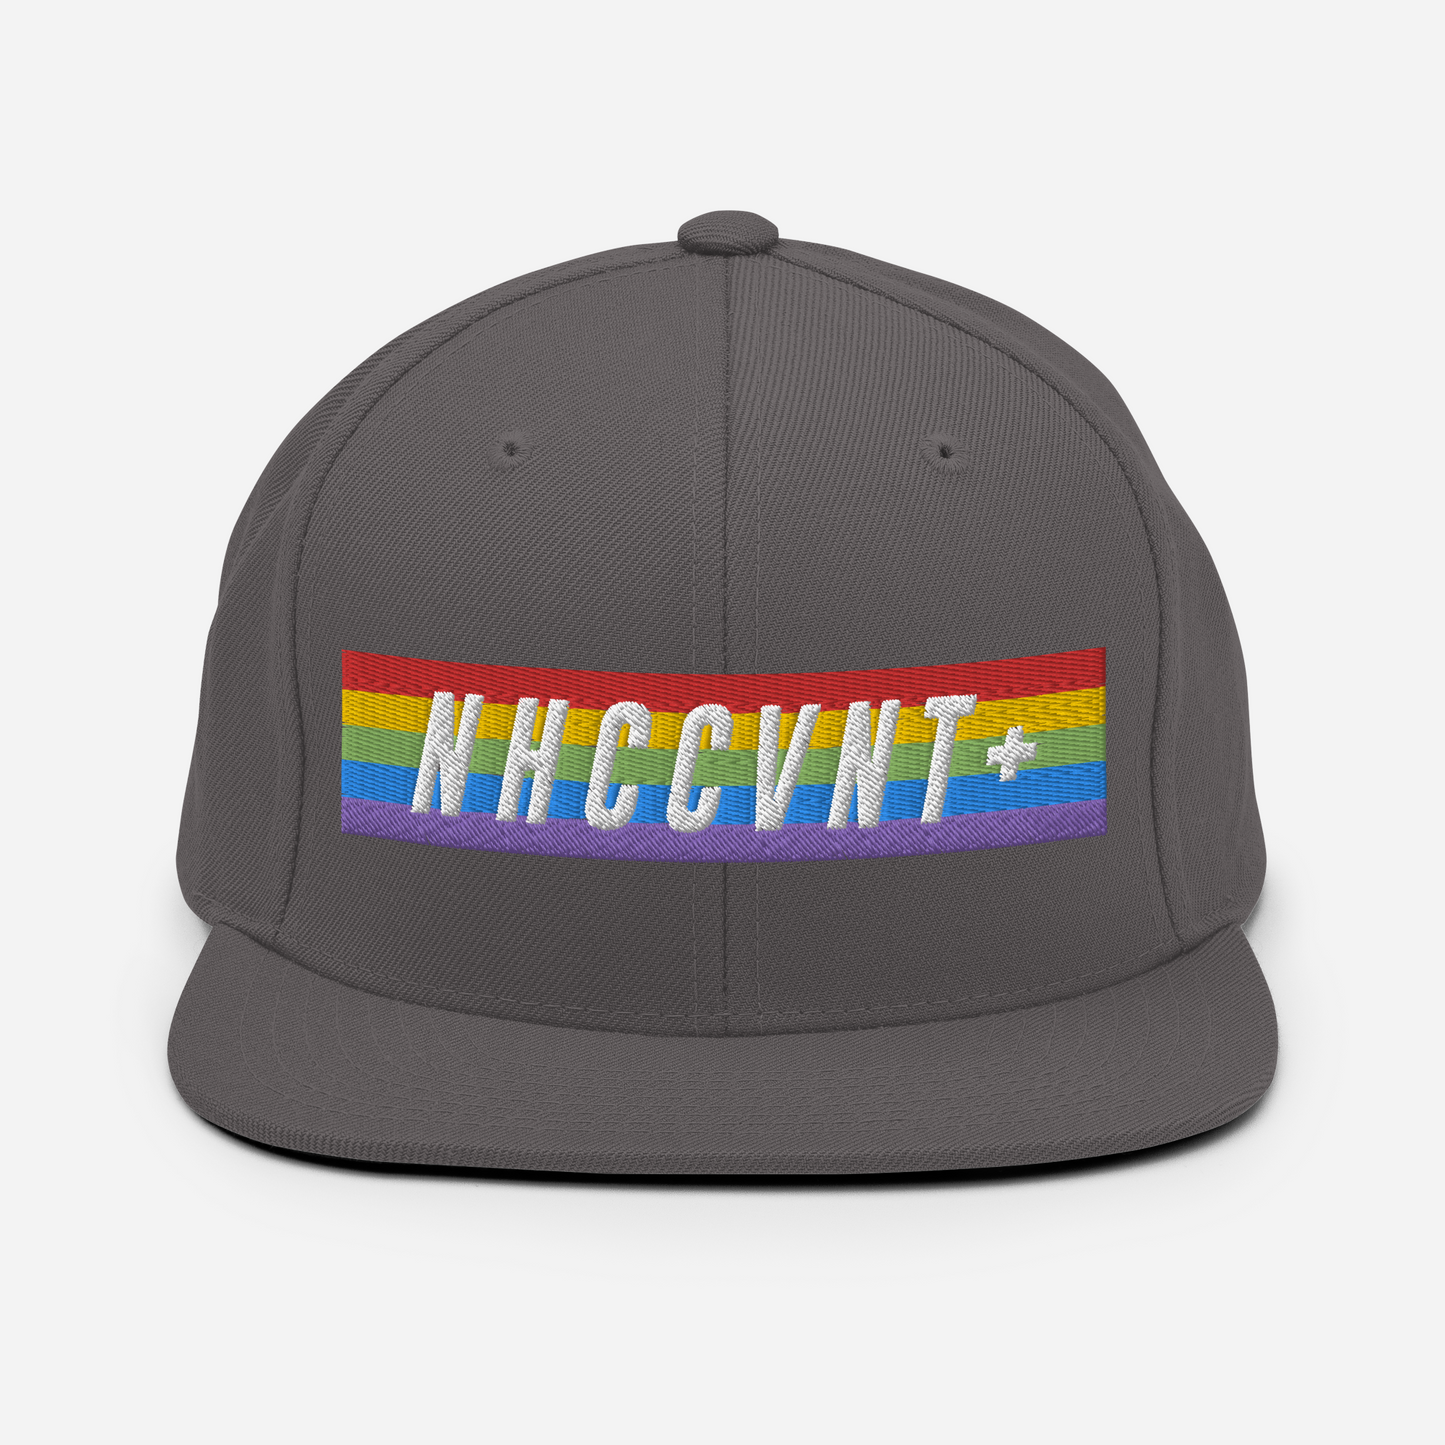 NHCCVNT+ Snapback Hat